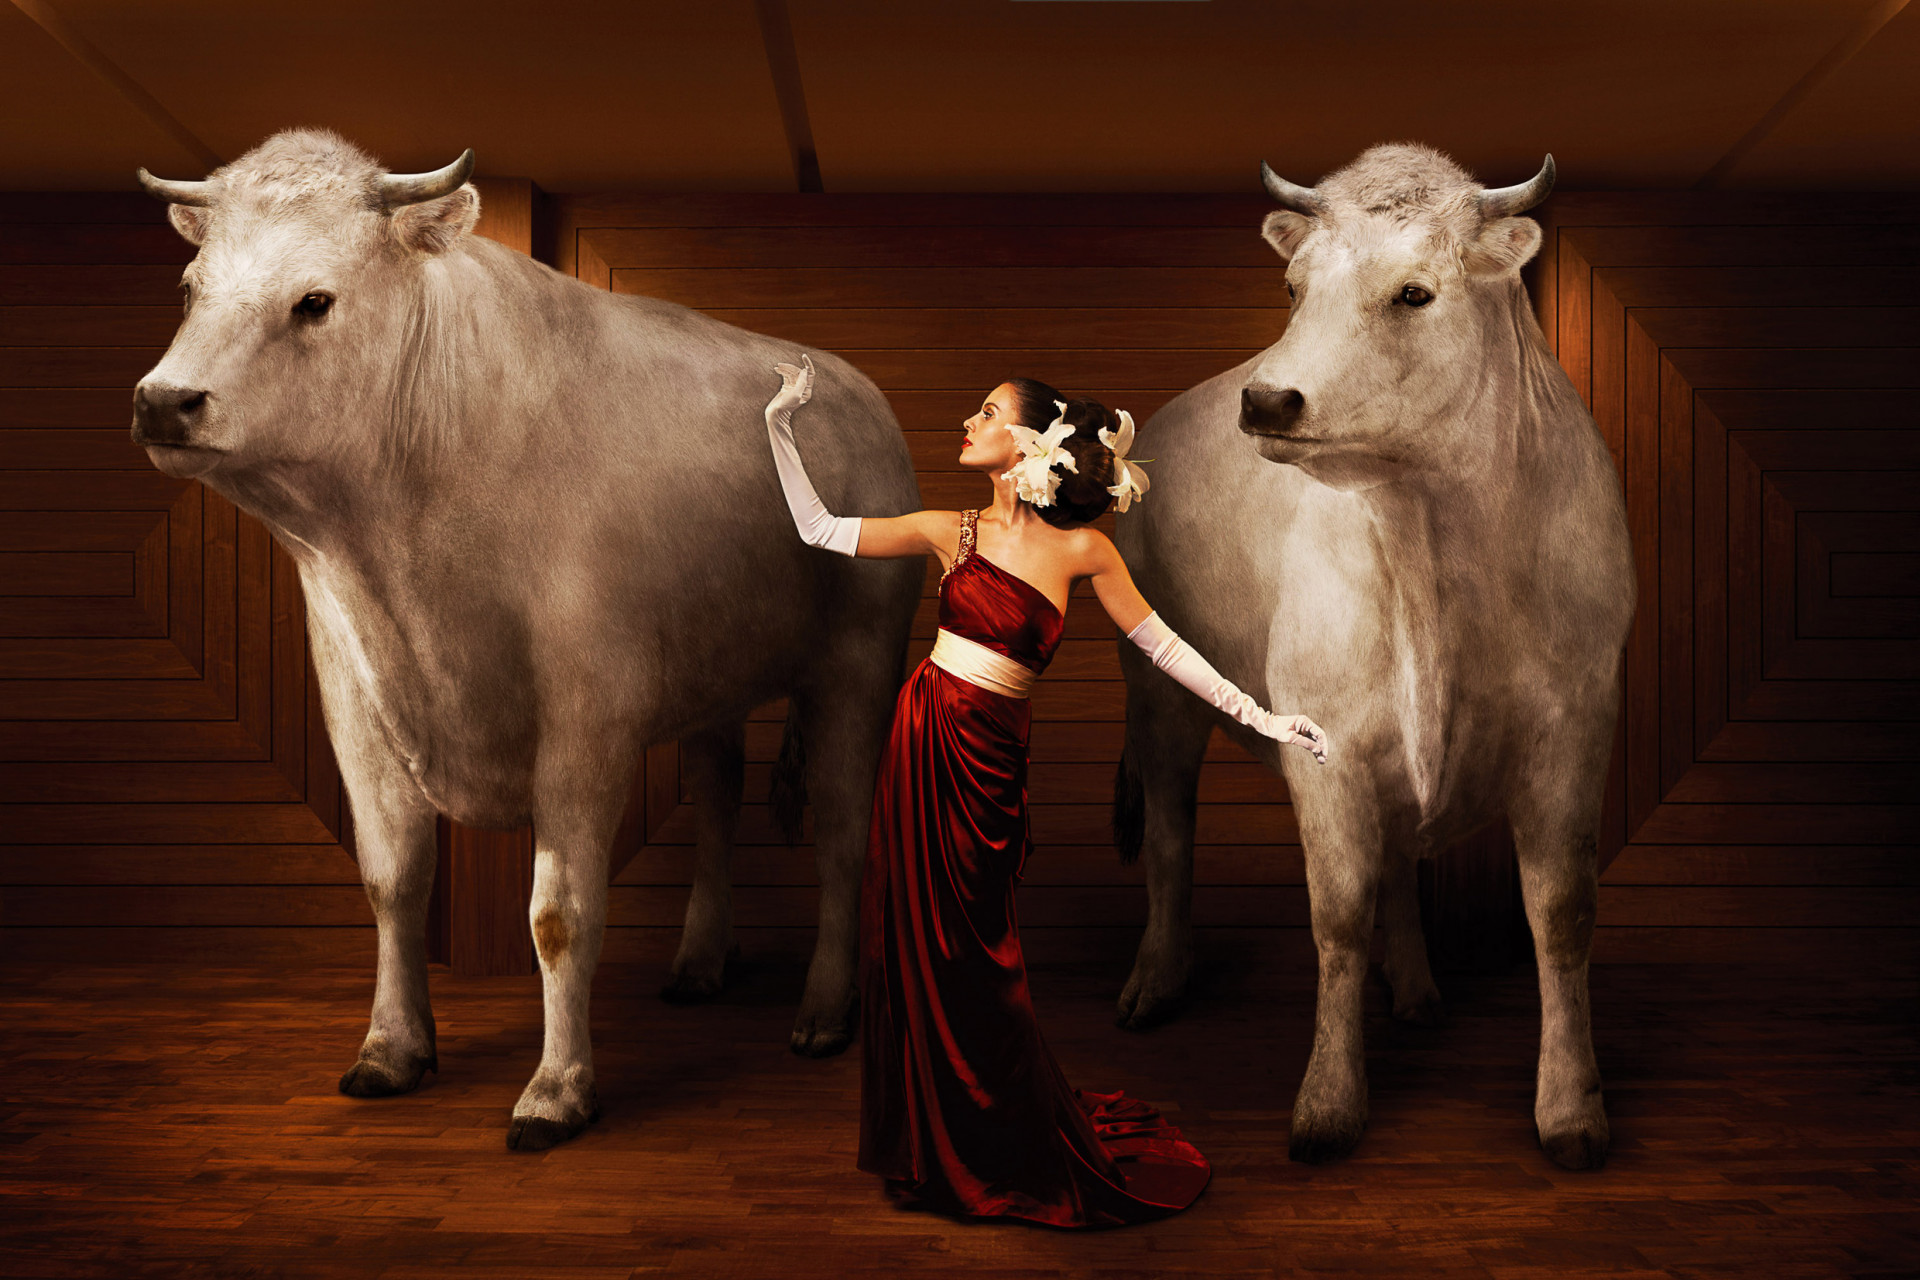 attractive woman between 2 cows